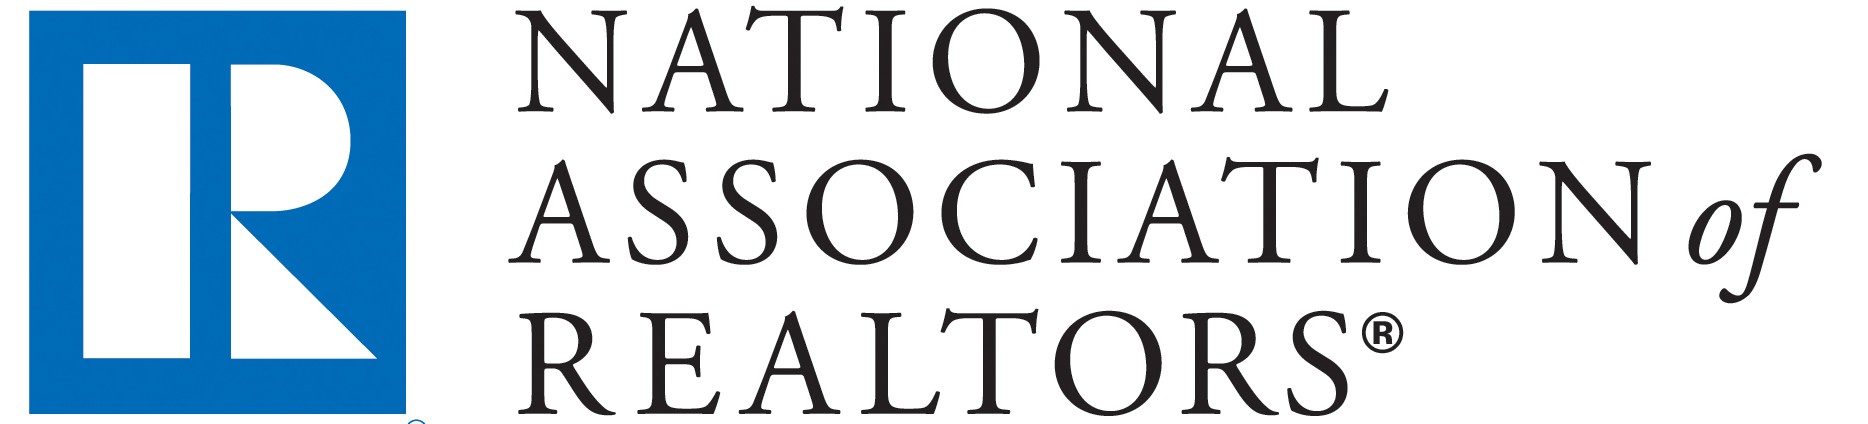 National Association of Realitors